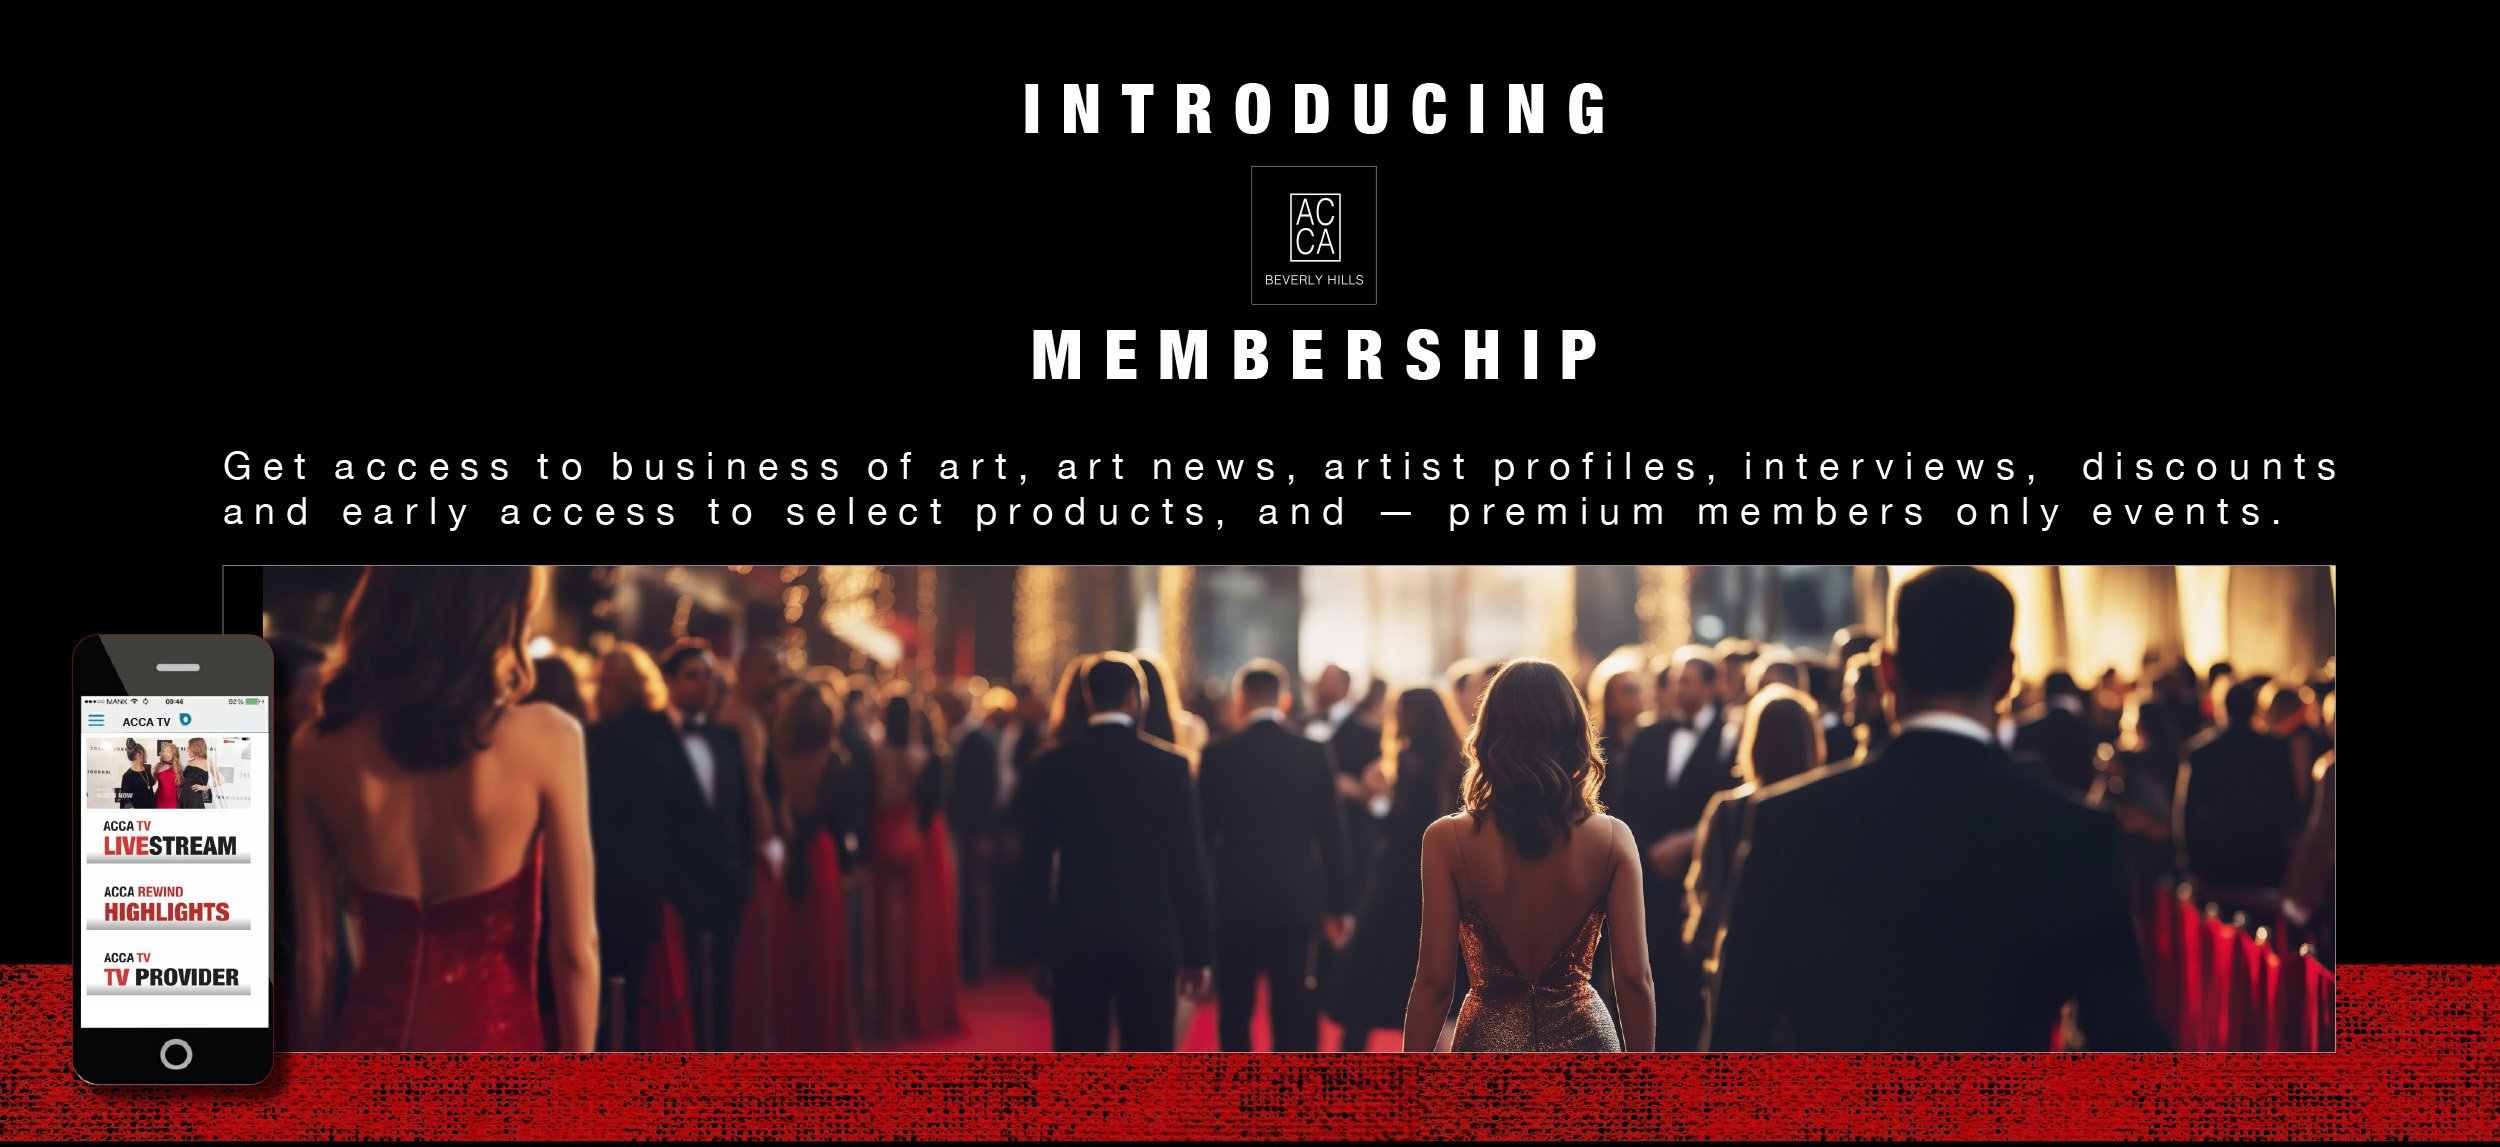 ACCA+Membership..jpg